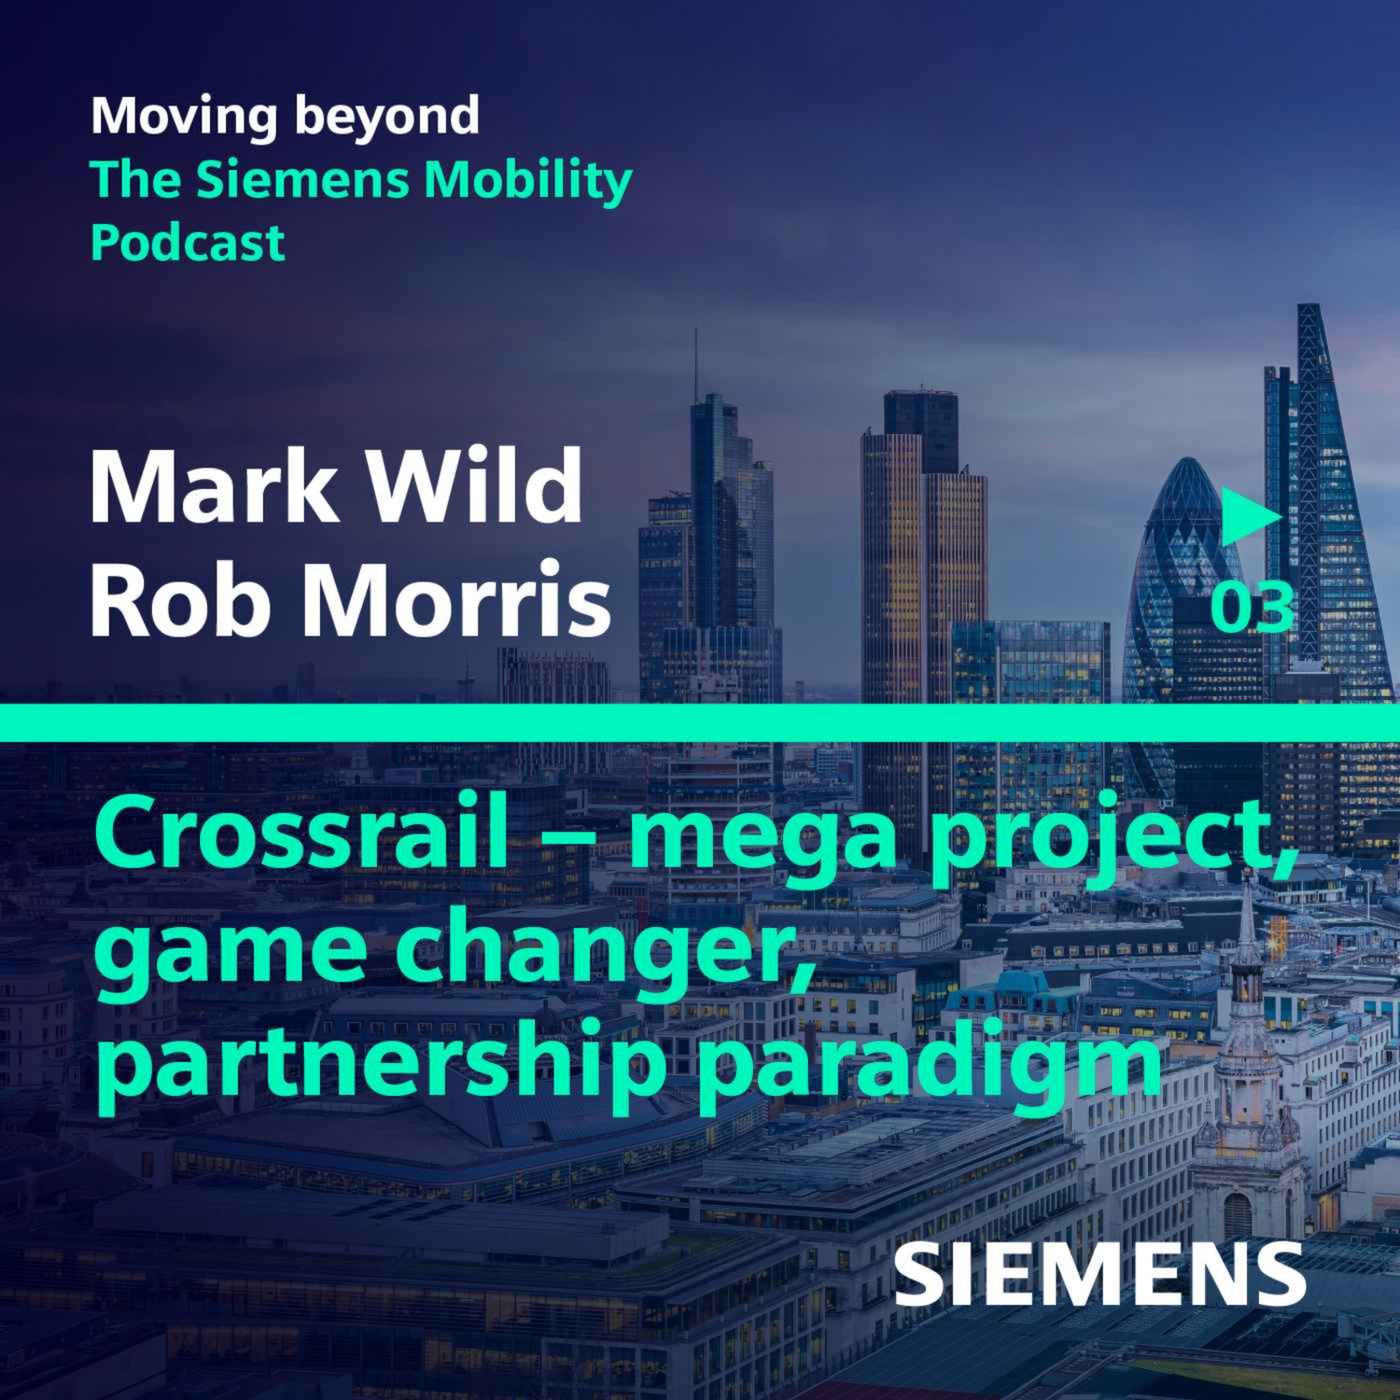 Crossrail - mega project, game changer, partnership paradigm